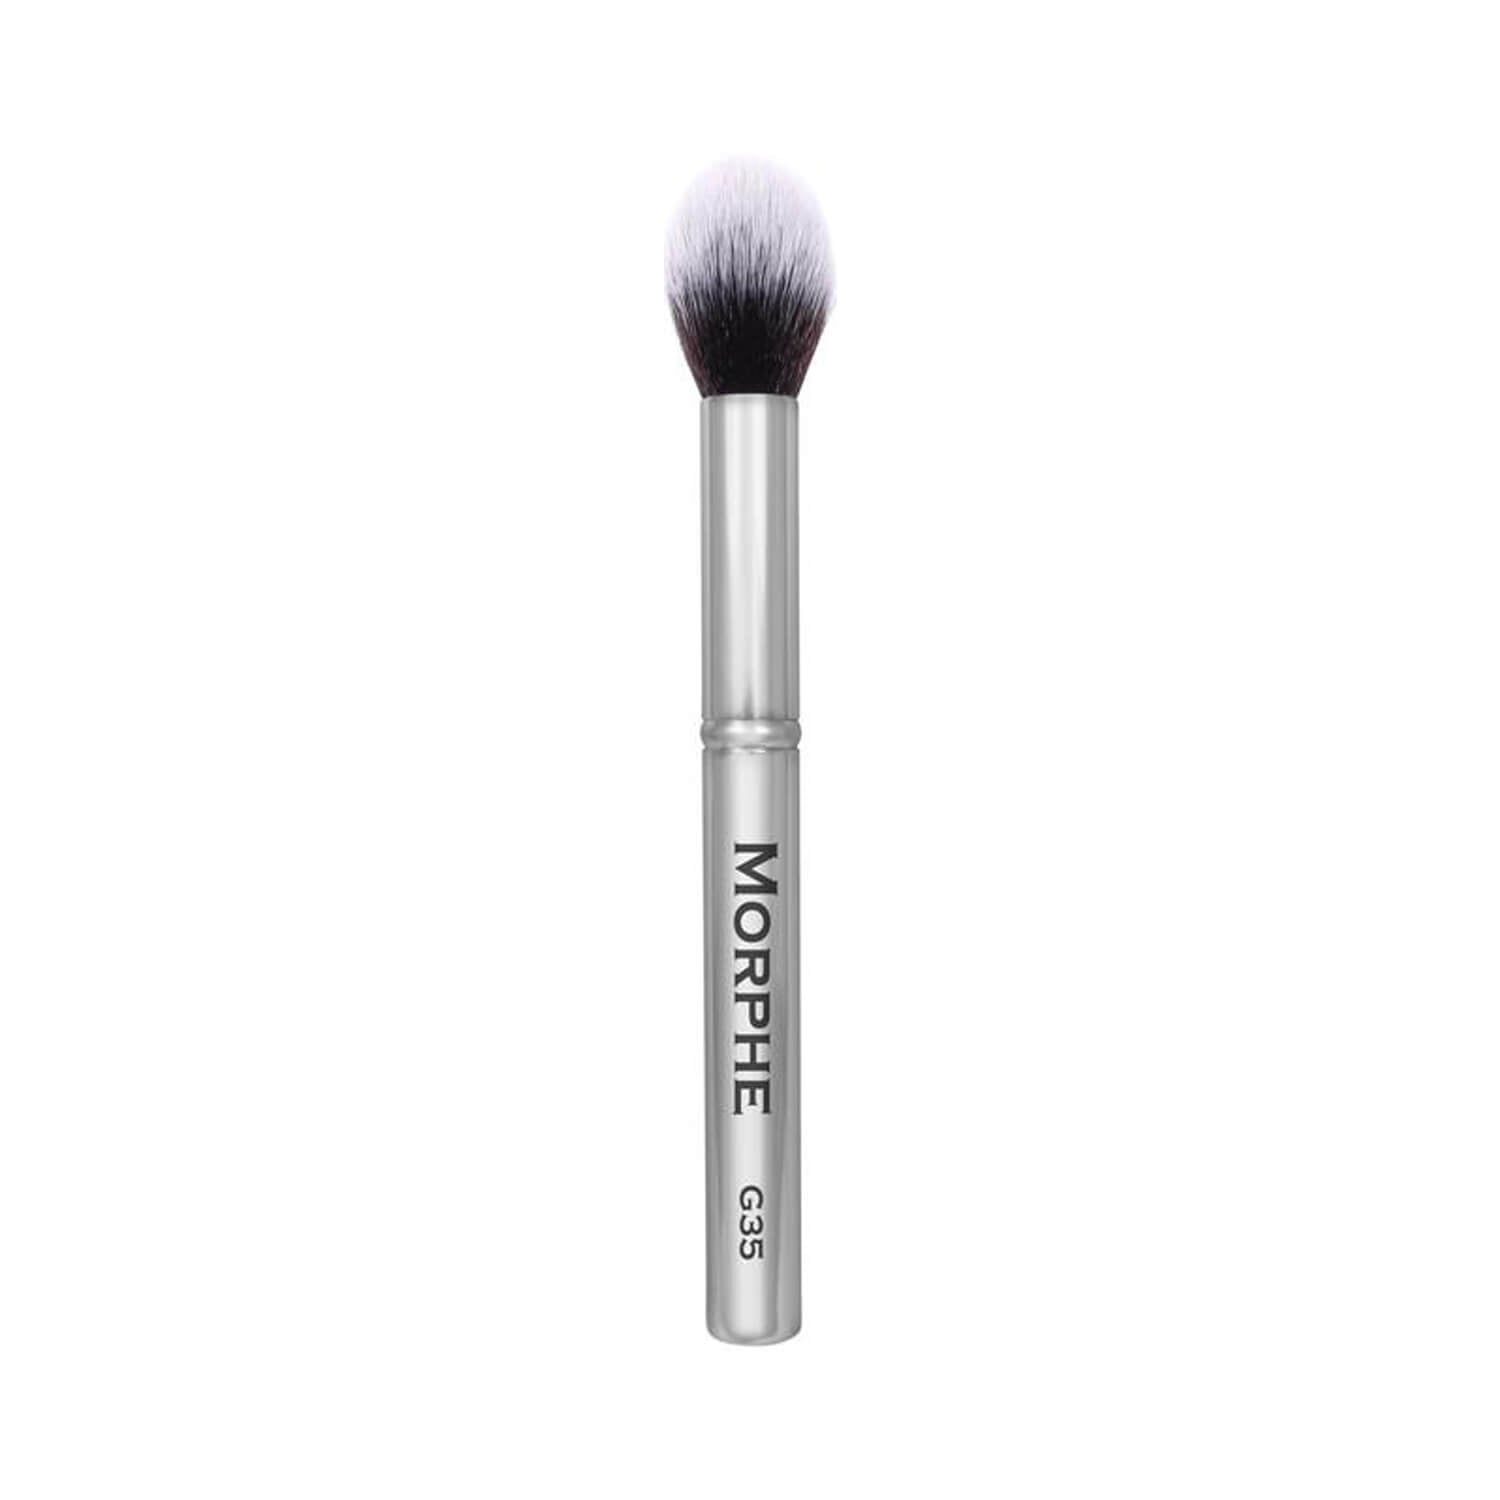 Morphe Cosmetics G35 Pointed Powder Brush